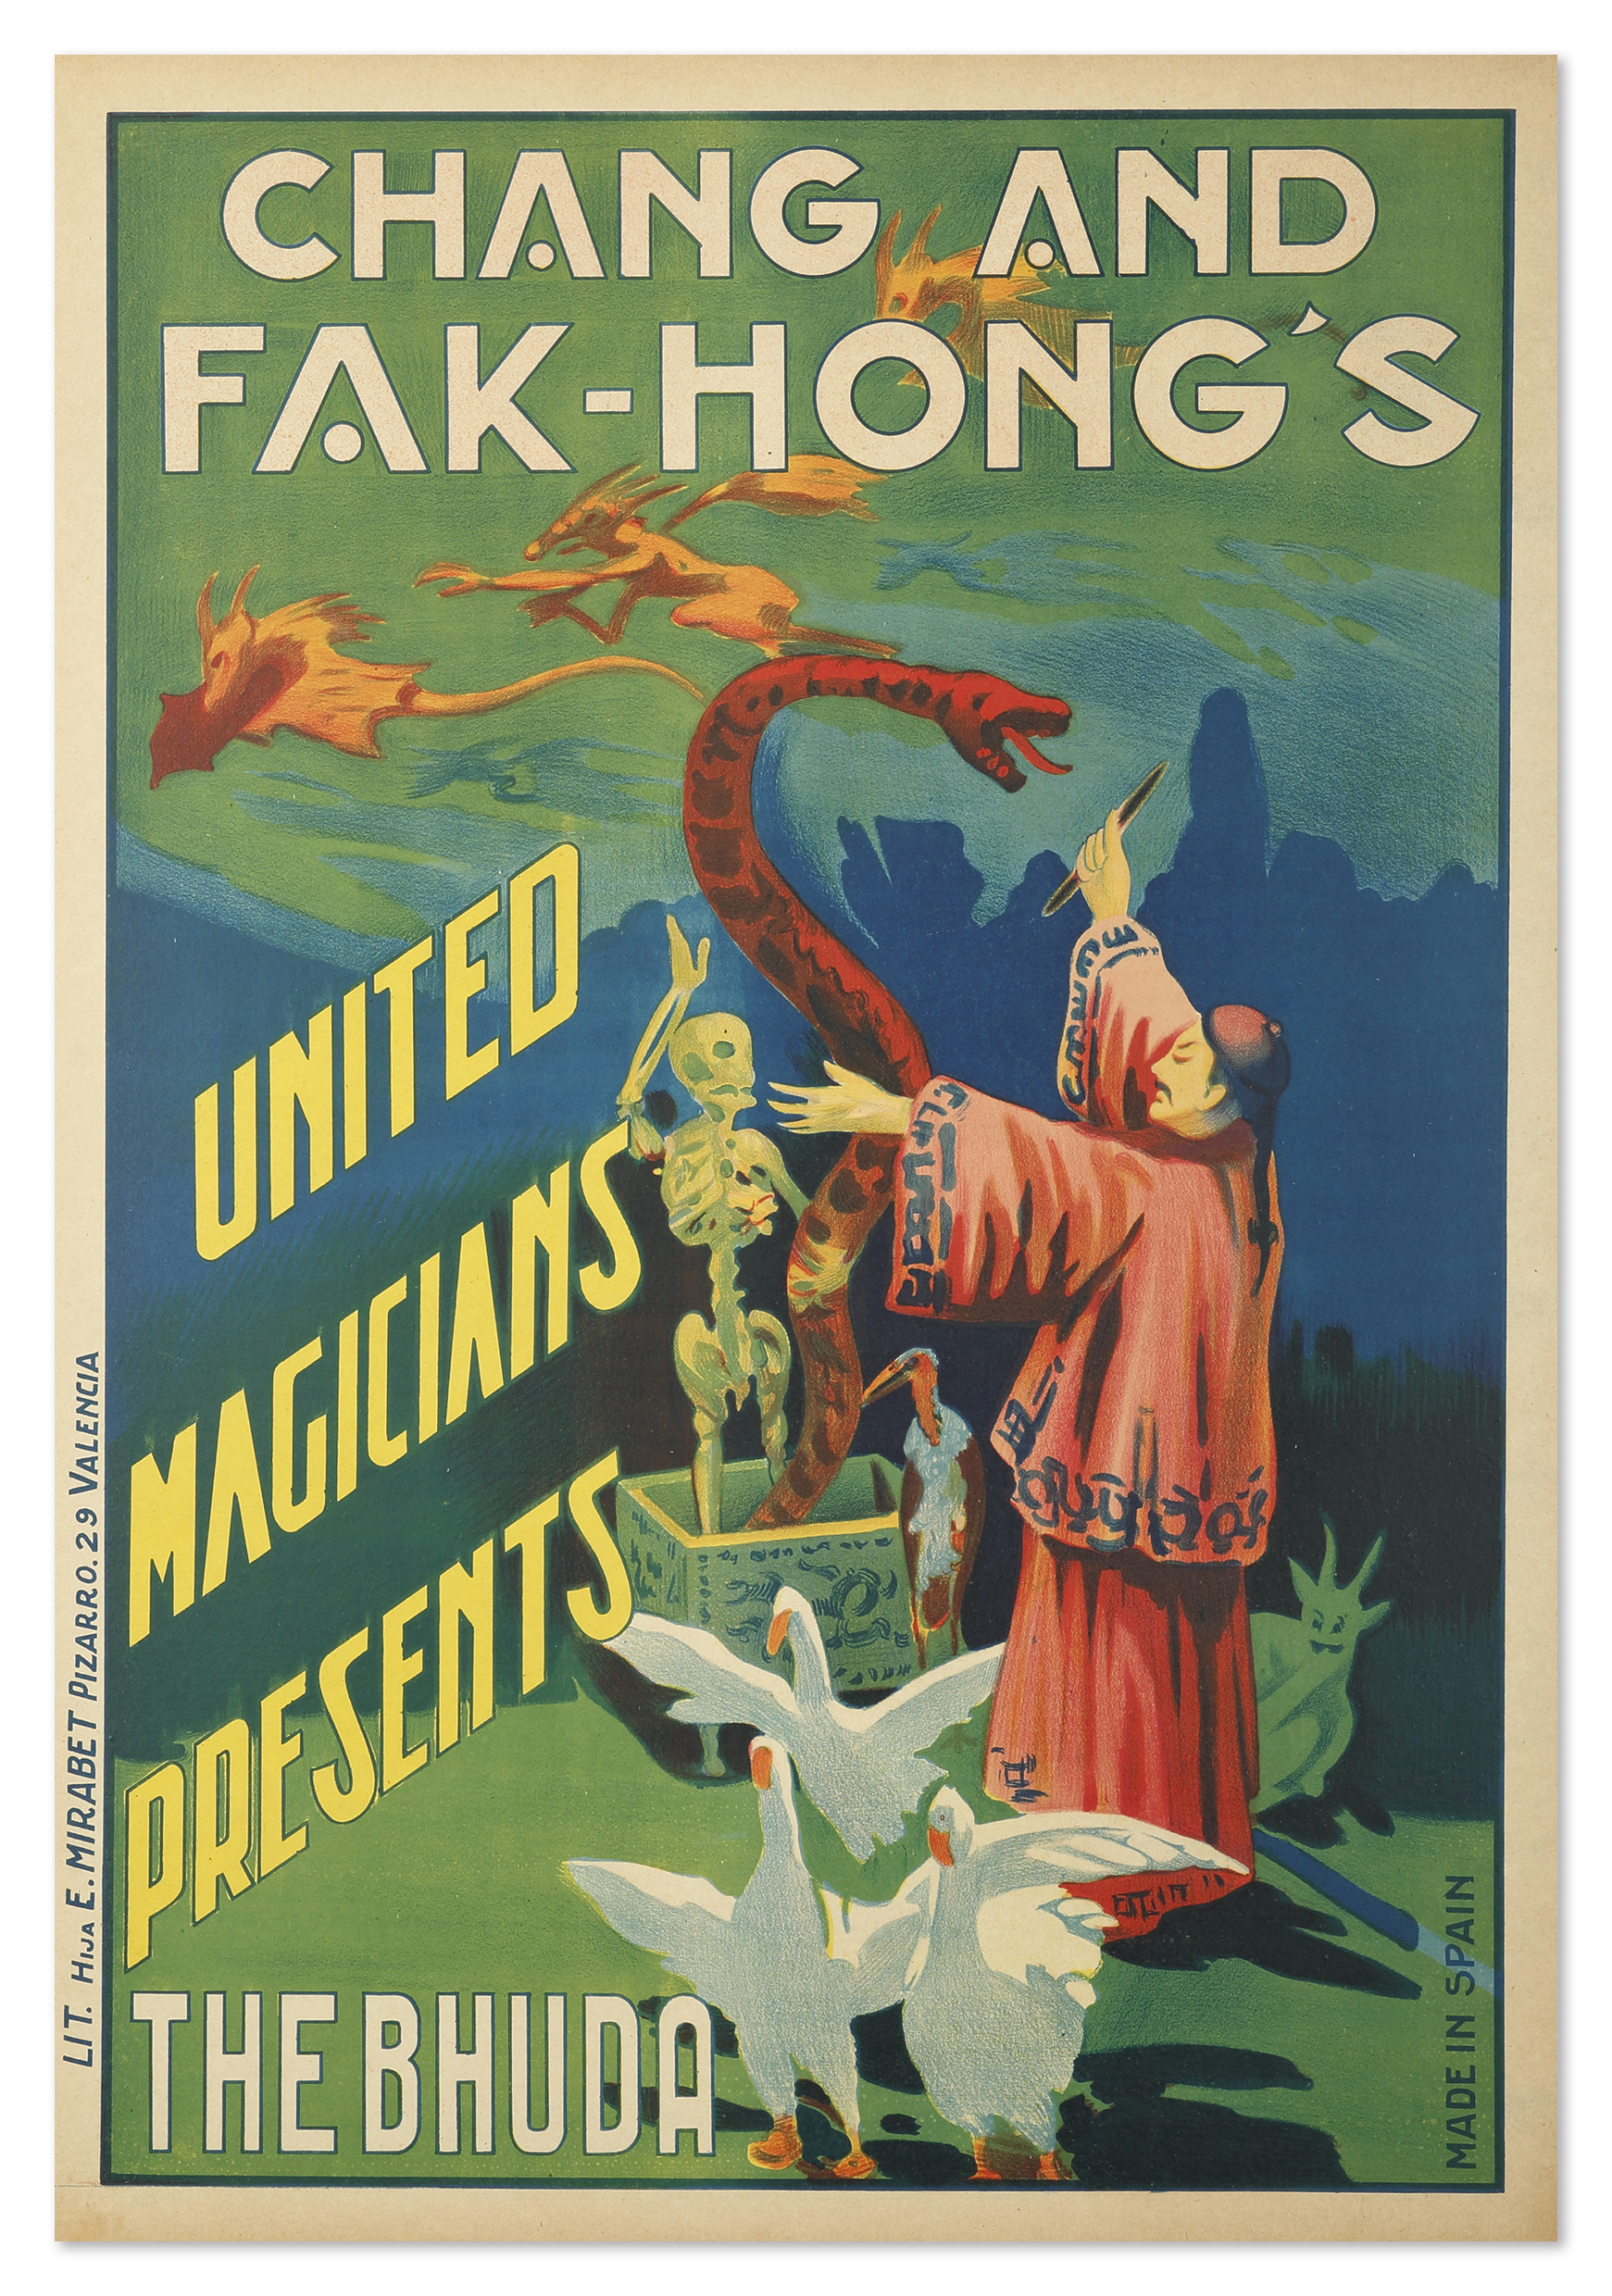 Chang and Fak-Hong's United Magicians Presents The Budha. sic - Vintage Print from 1922